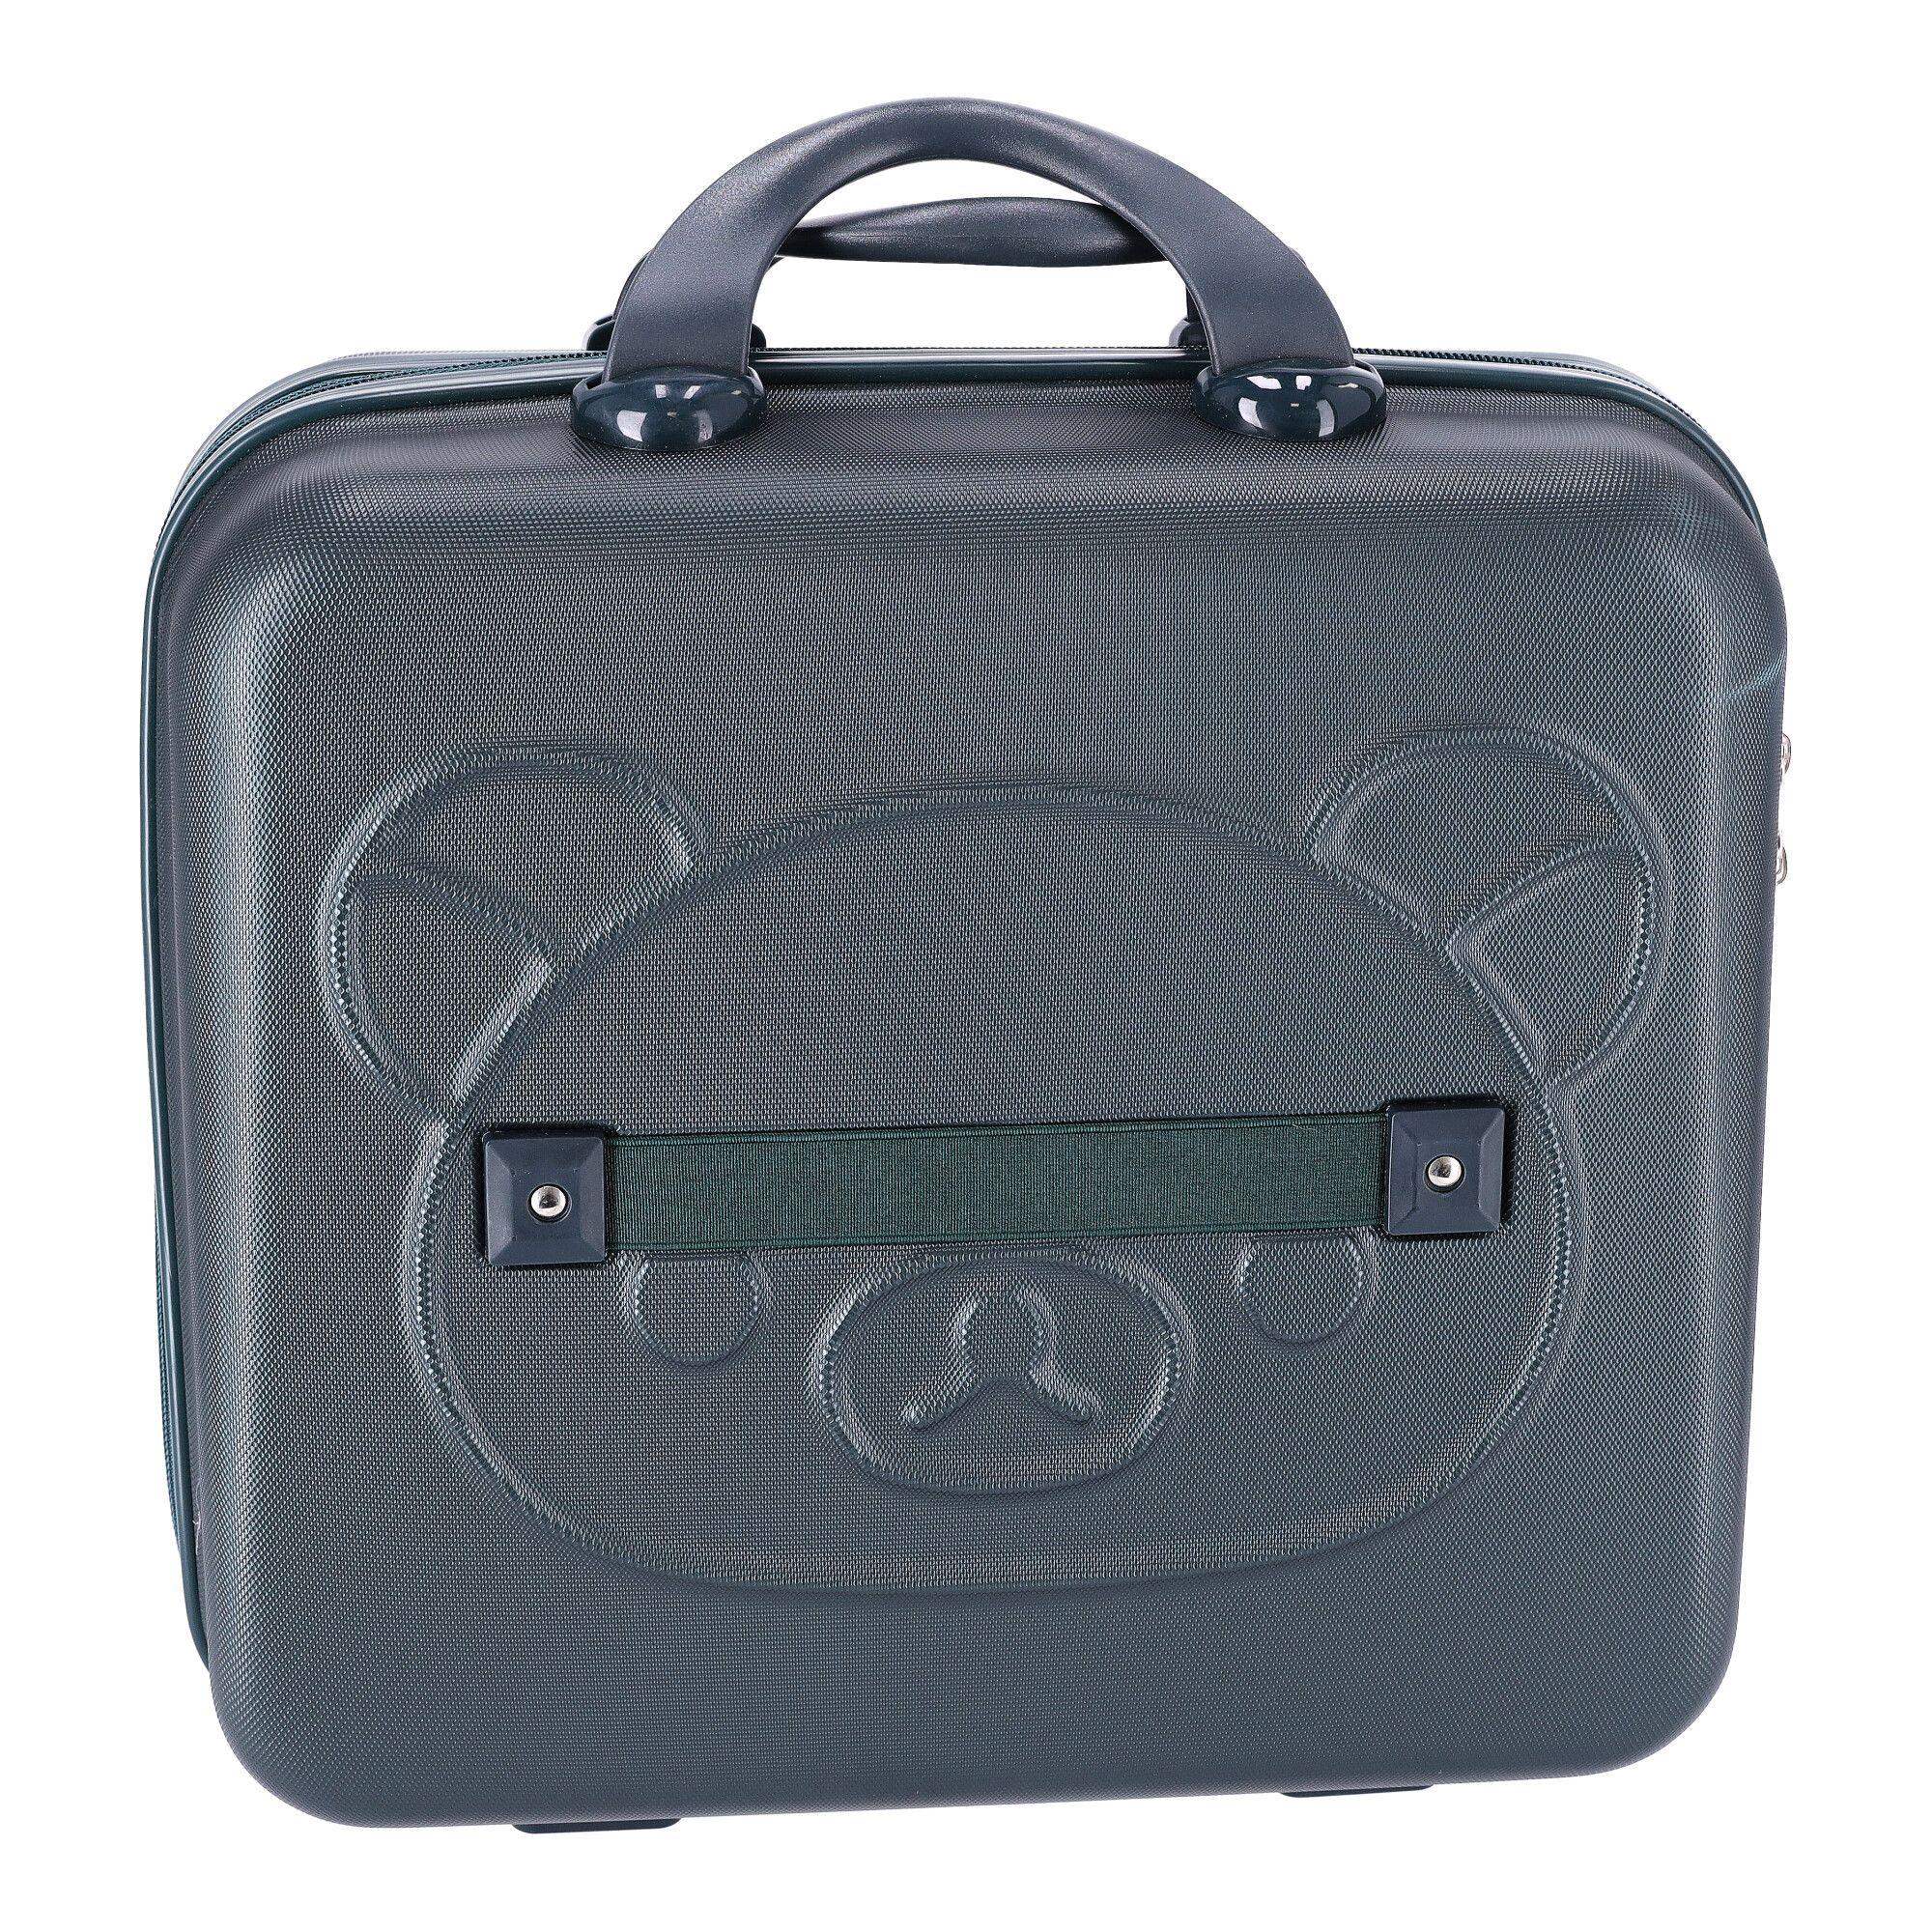 Children's luggage / Lovely travel cosmetic bag - dark green